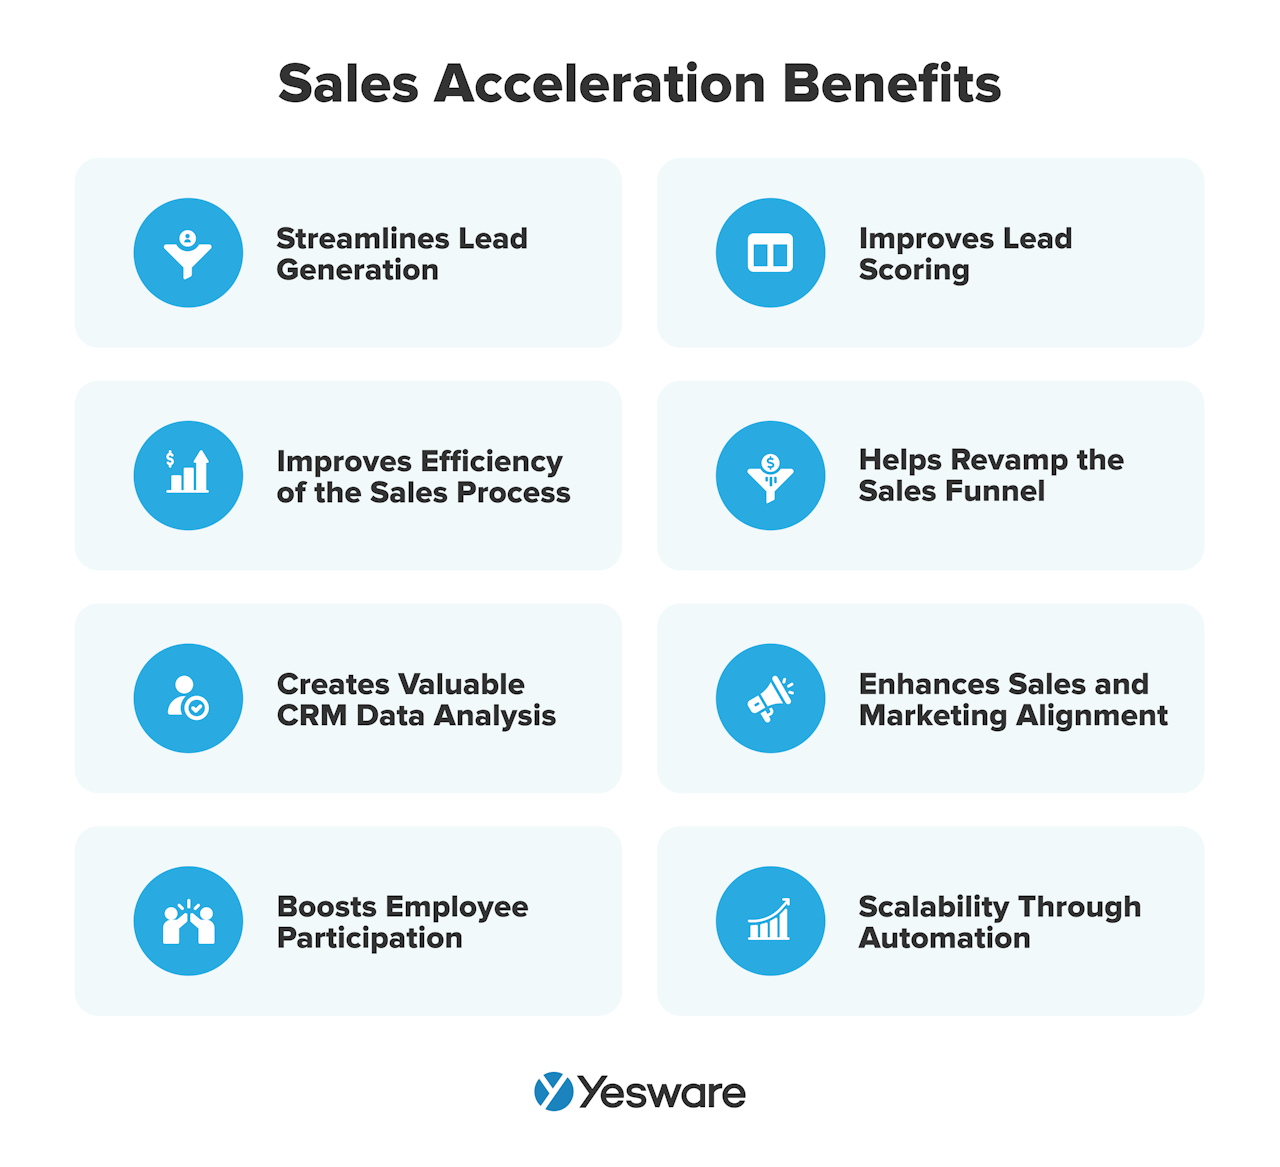 Sales acceleration benefits